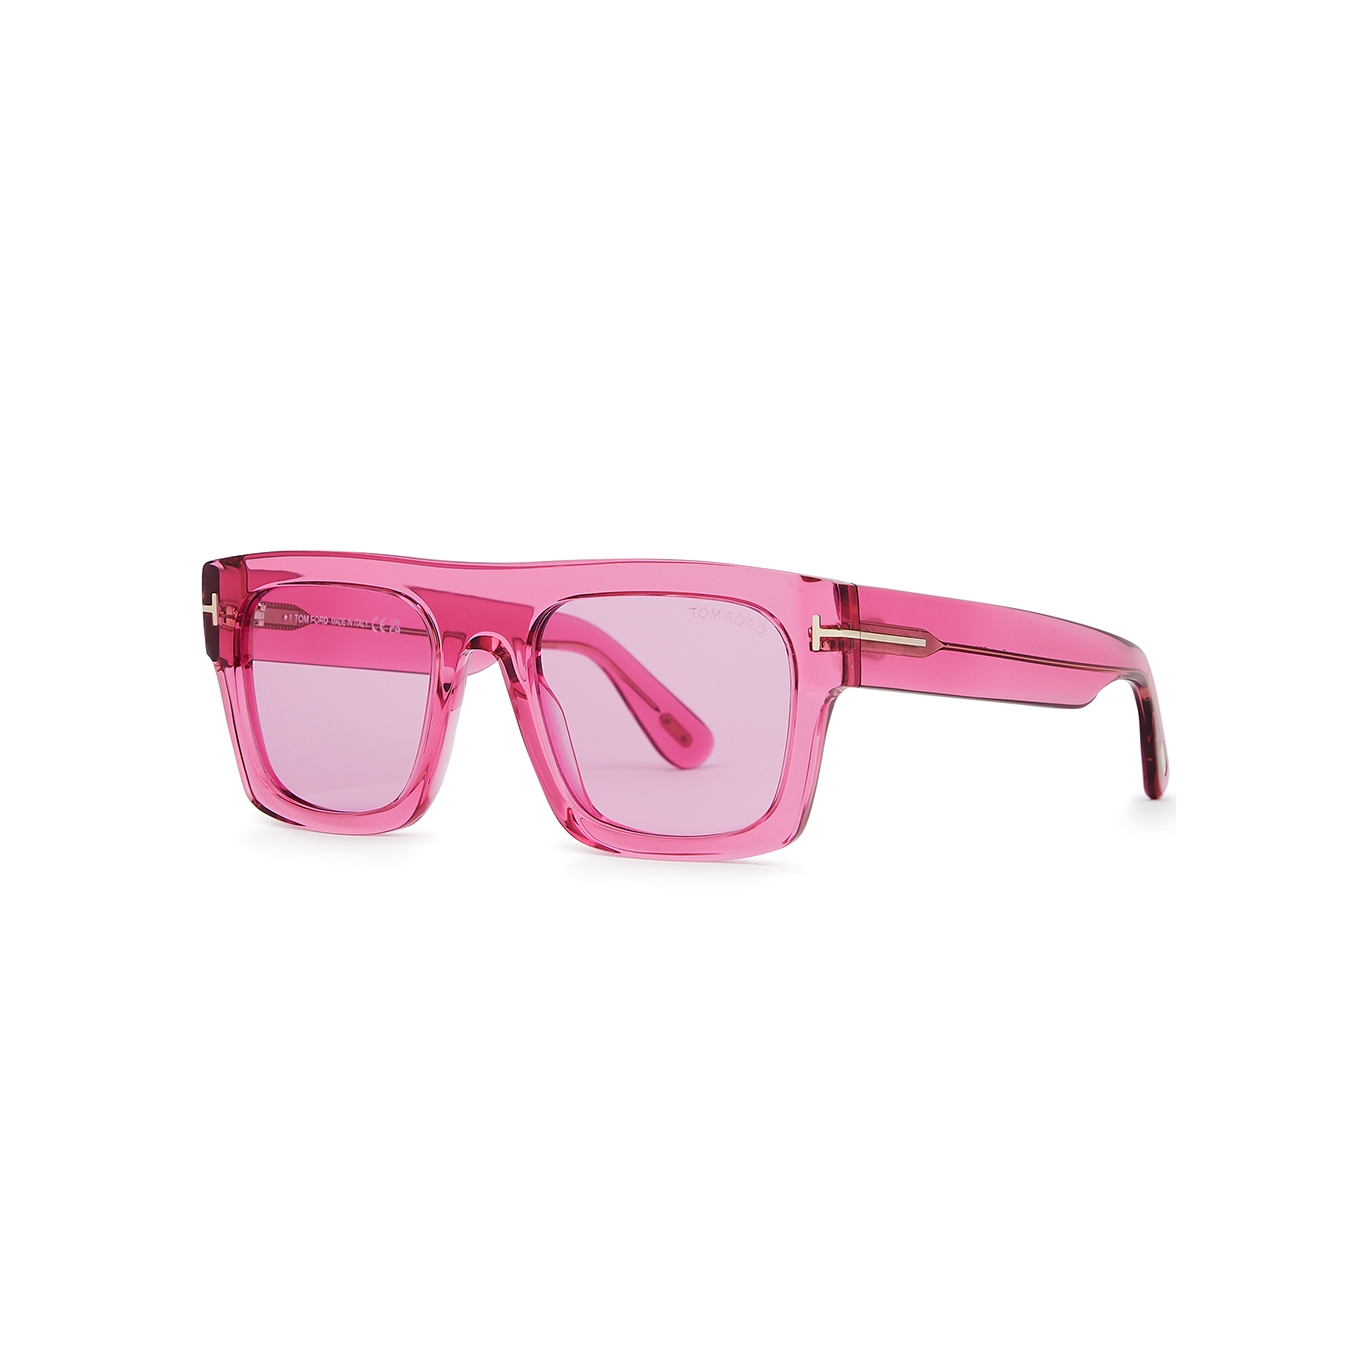 Tom Ford Fausto Square-frame Sunglasses